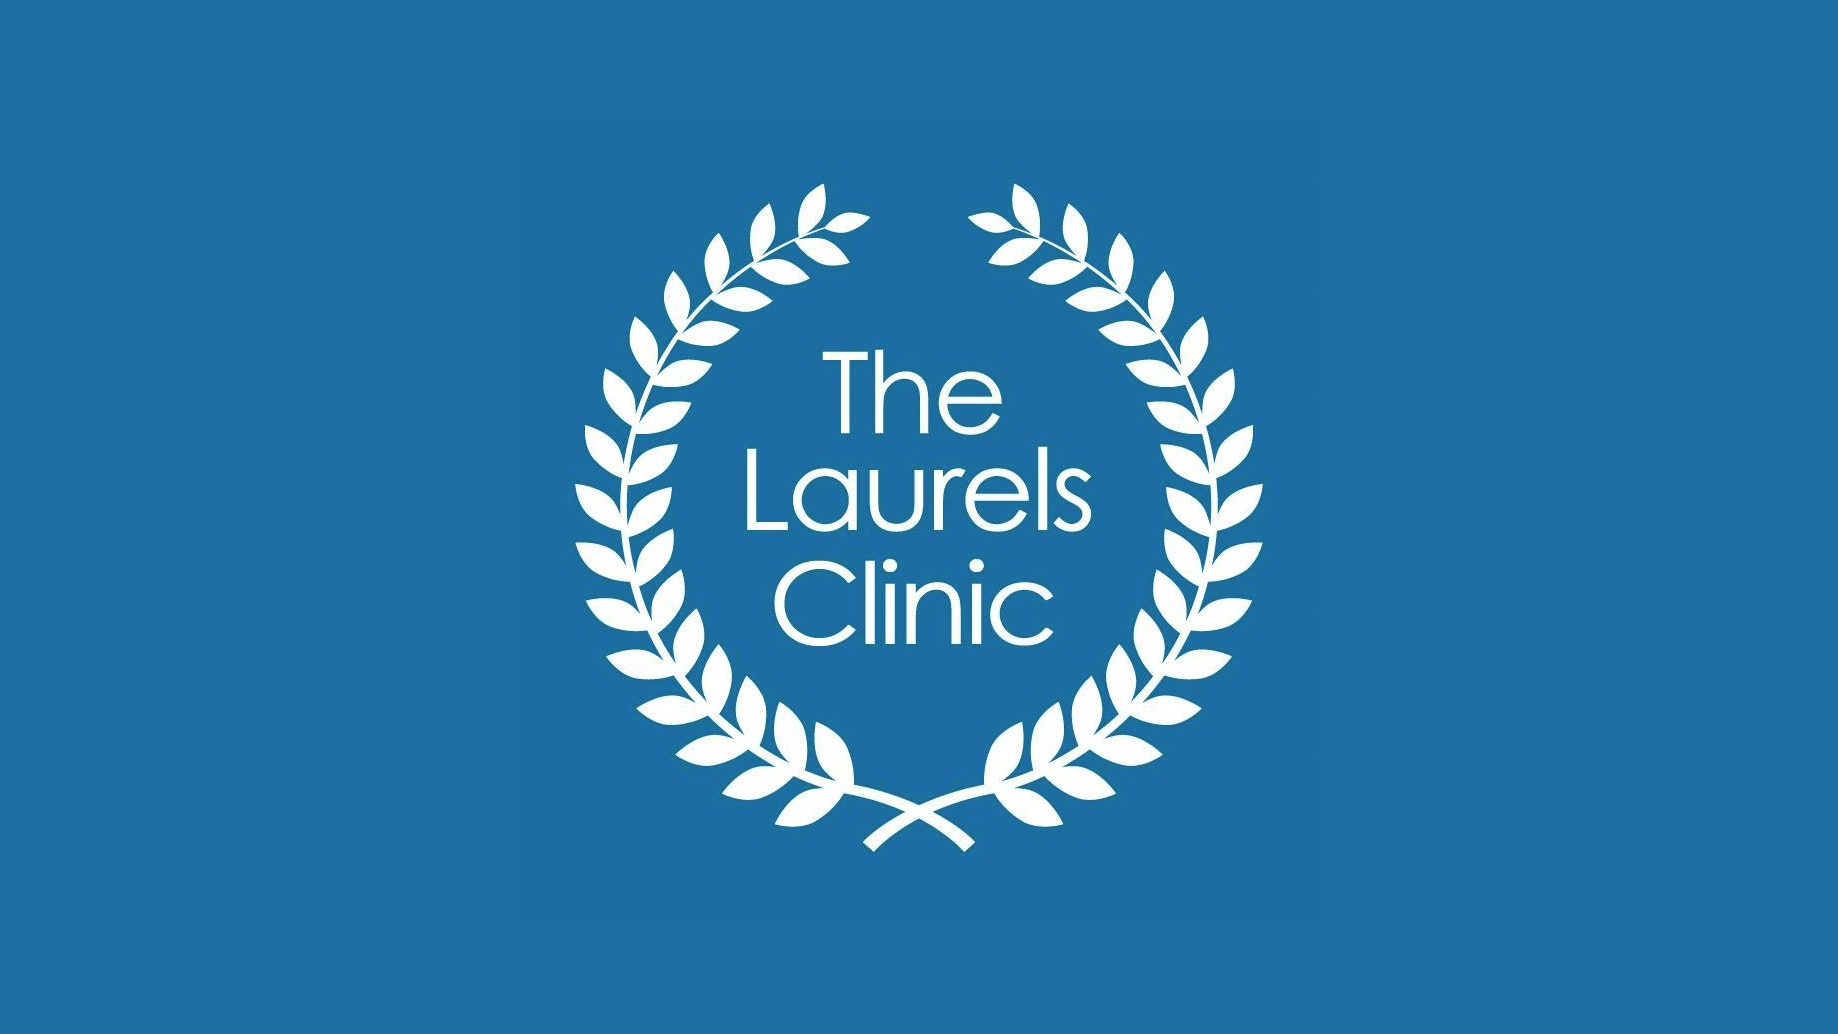 The Laurels Clinic Jlife Magazine